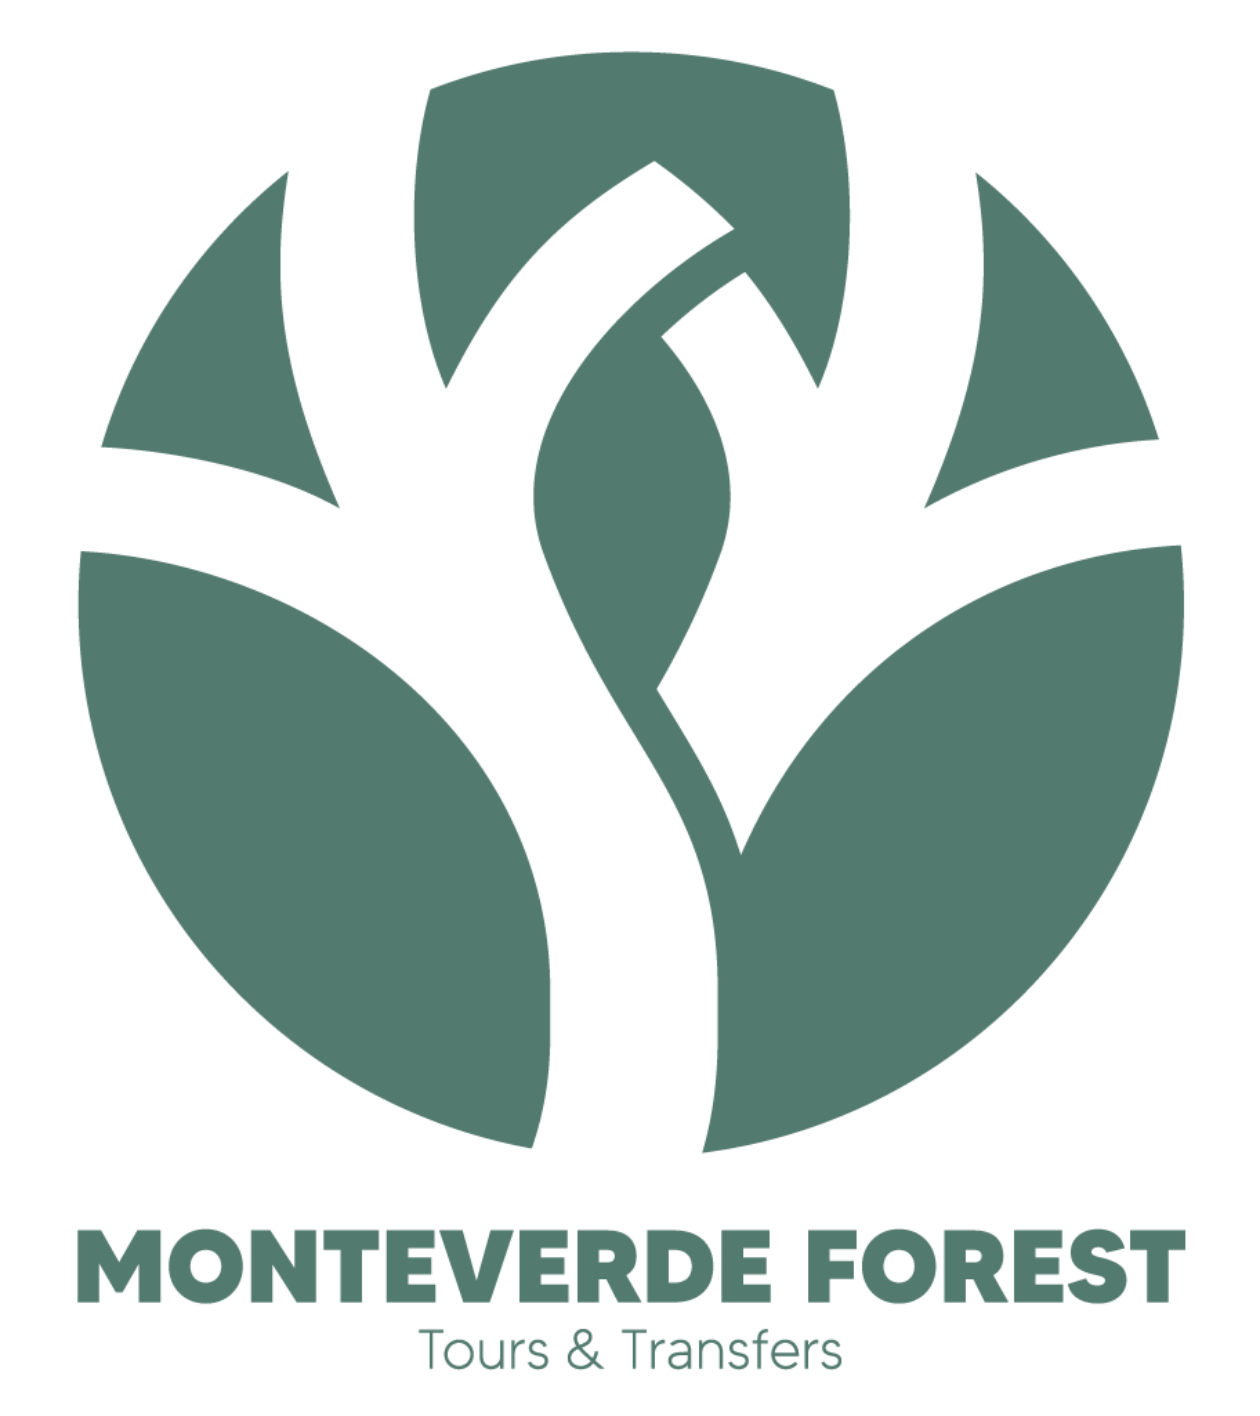 Monteverde Forest Tours & Transfers